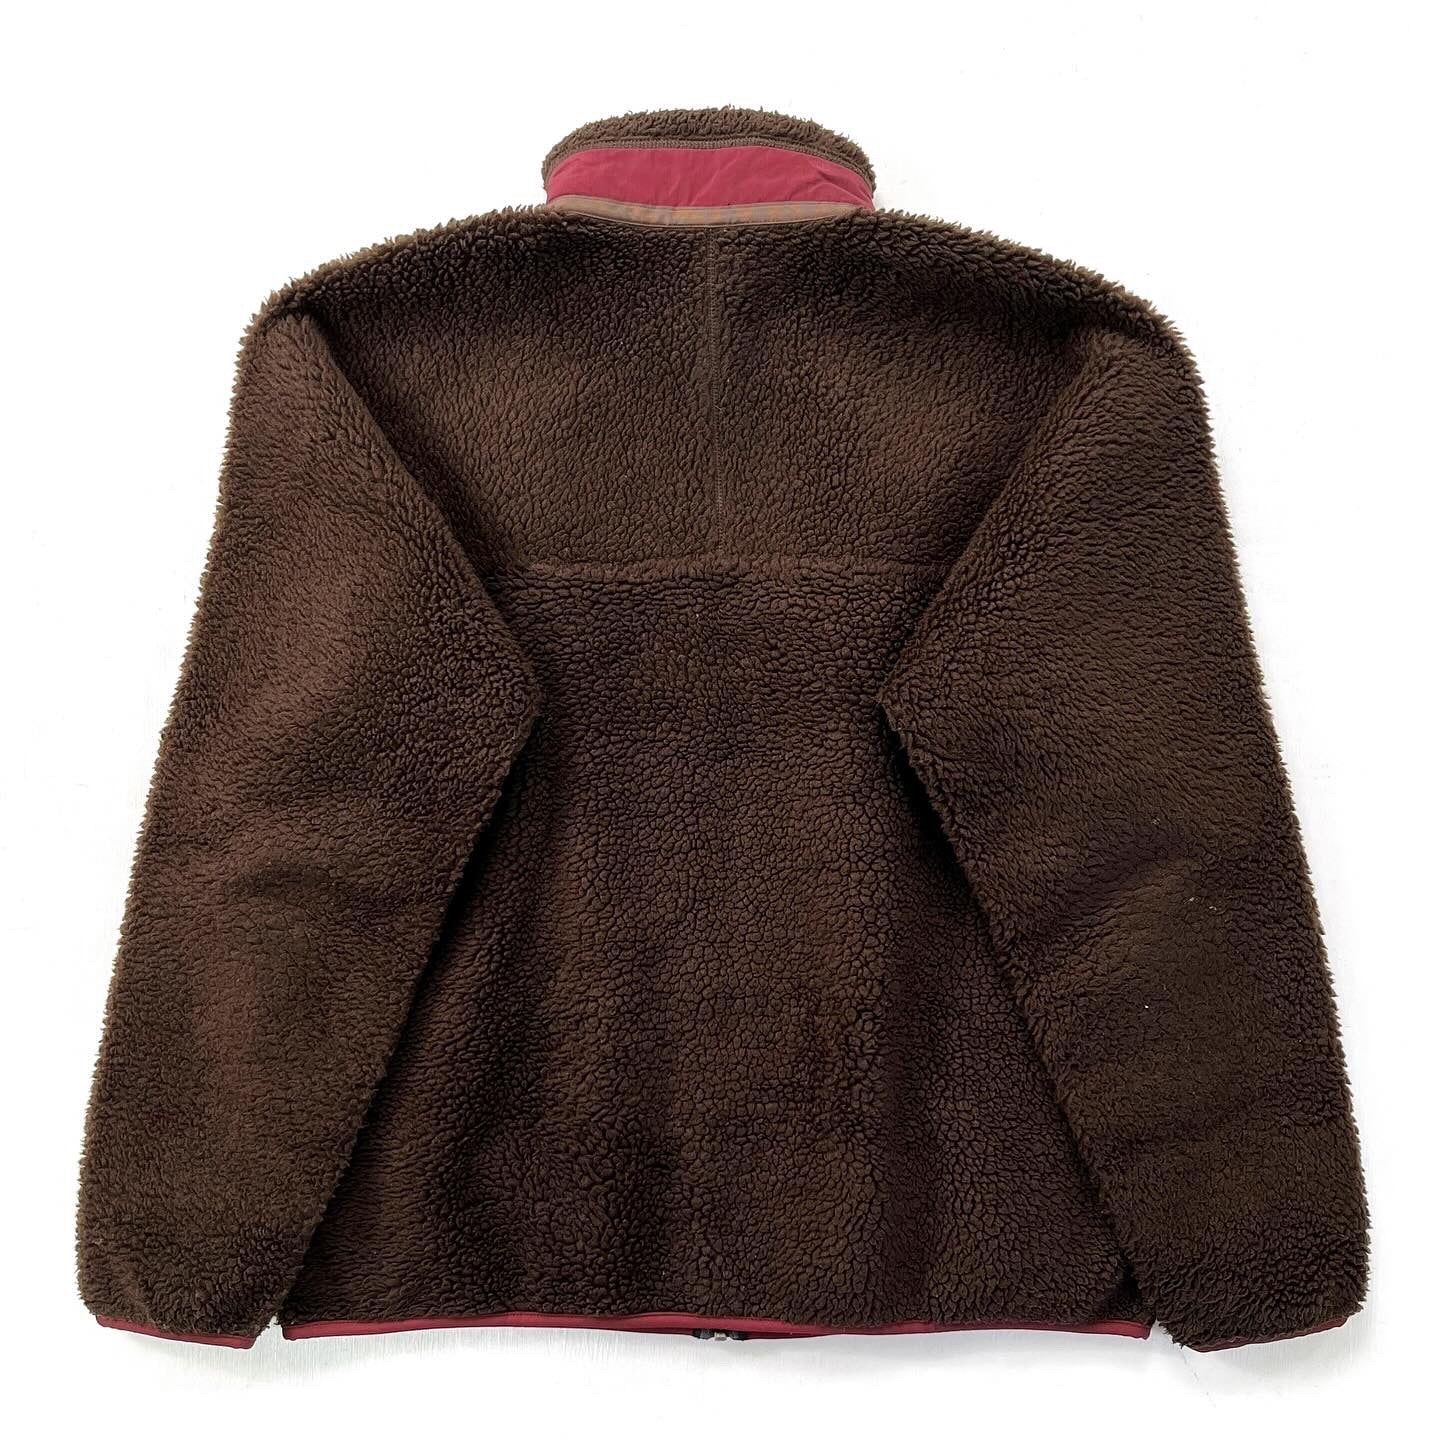 2011 Patagonia Retro-X Fleece Jacket, Black Oak & Pomegranate (L)